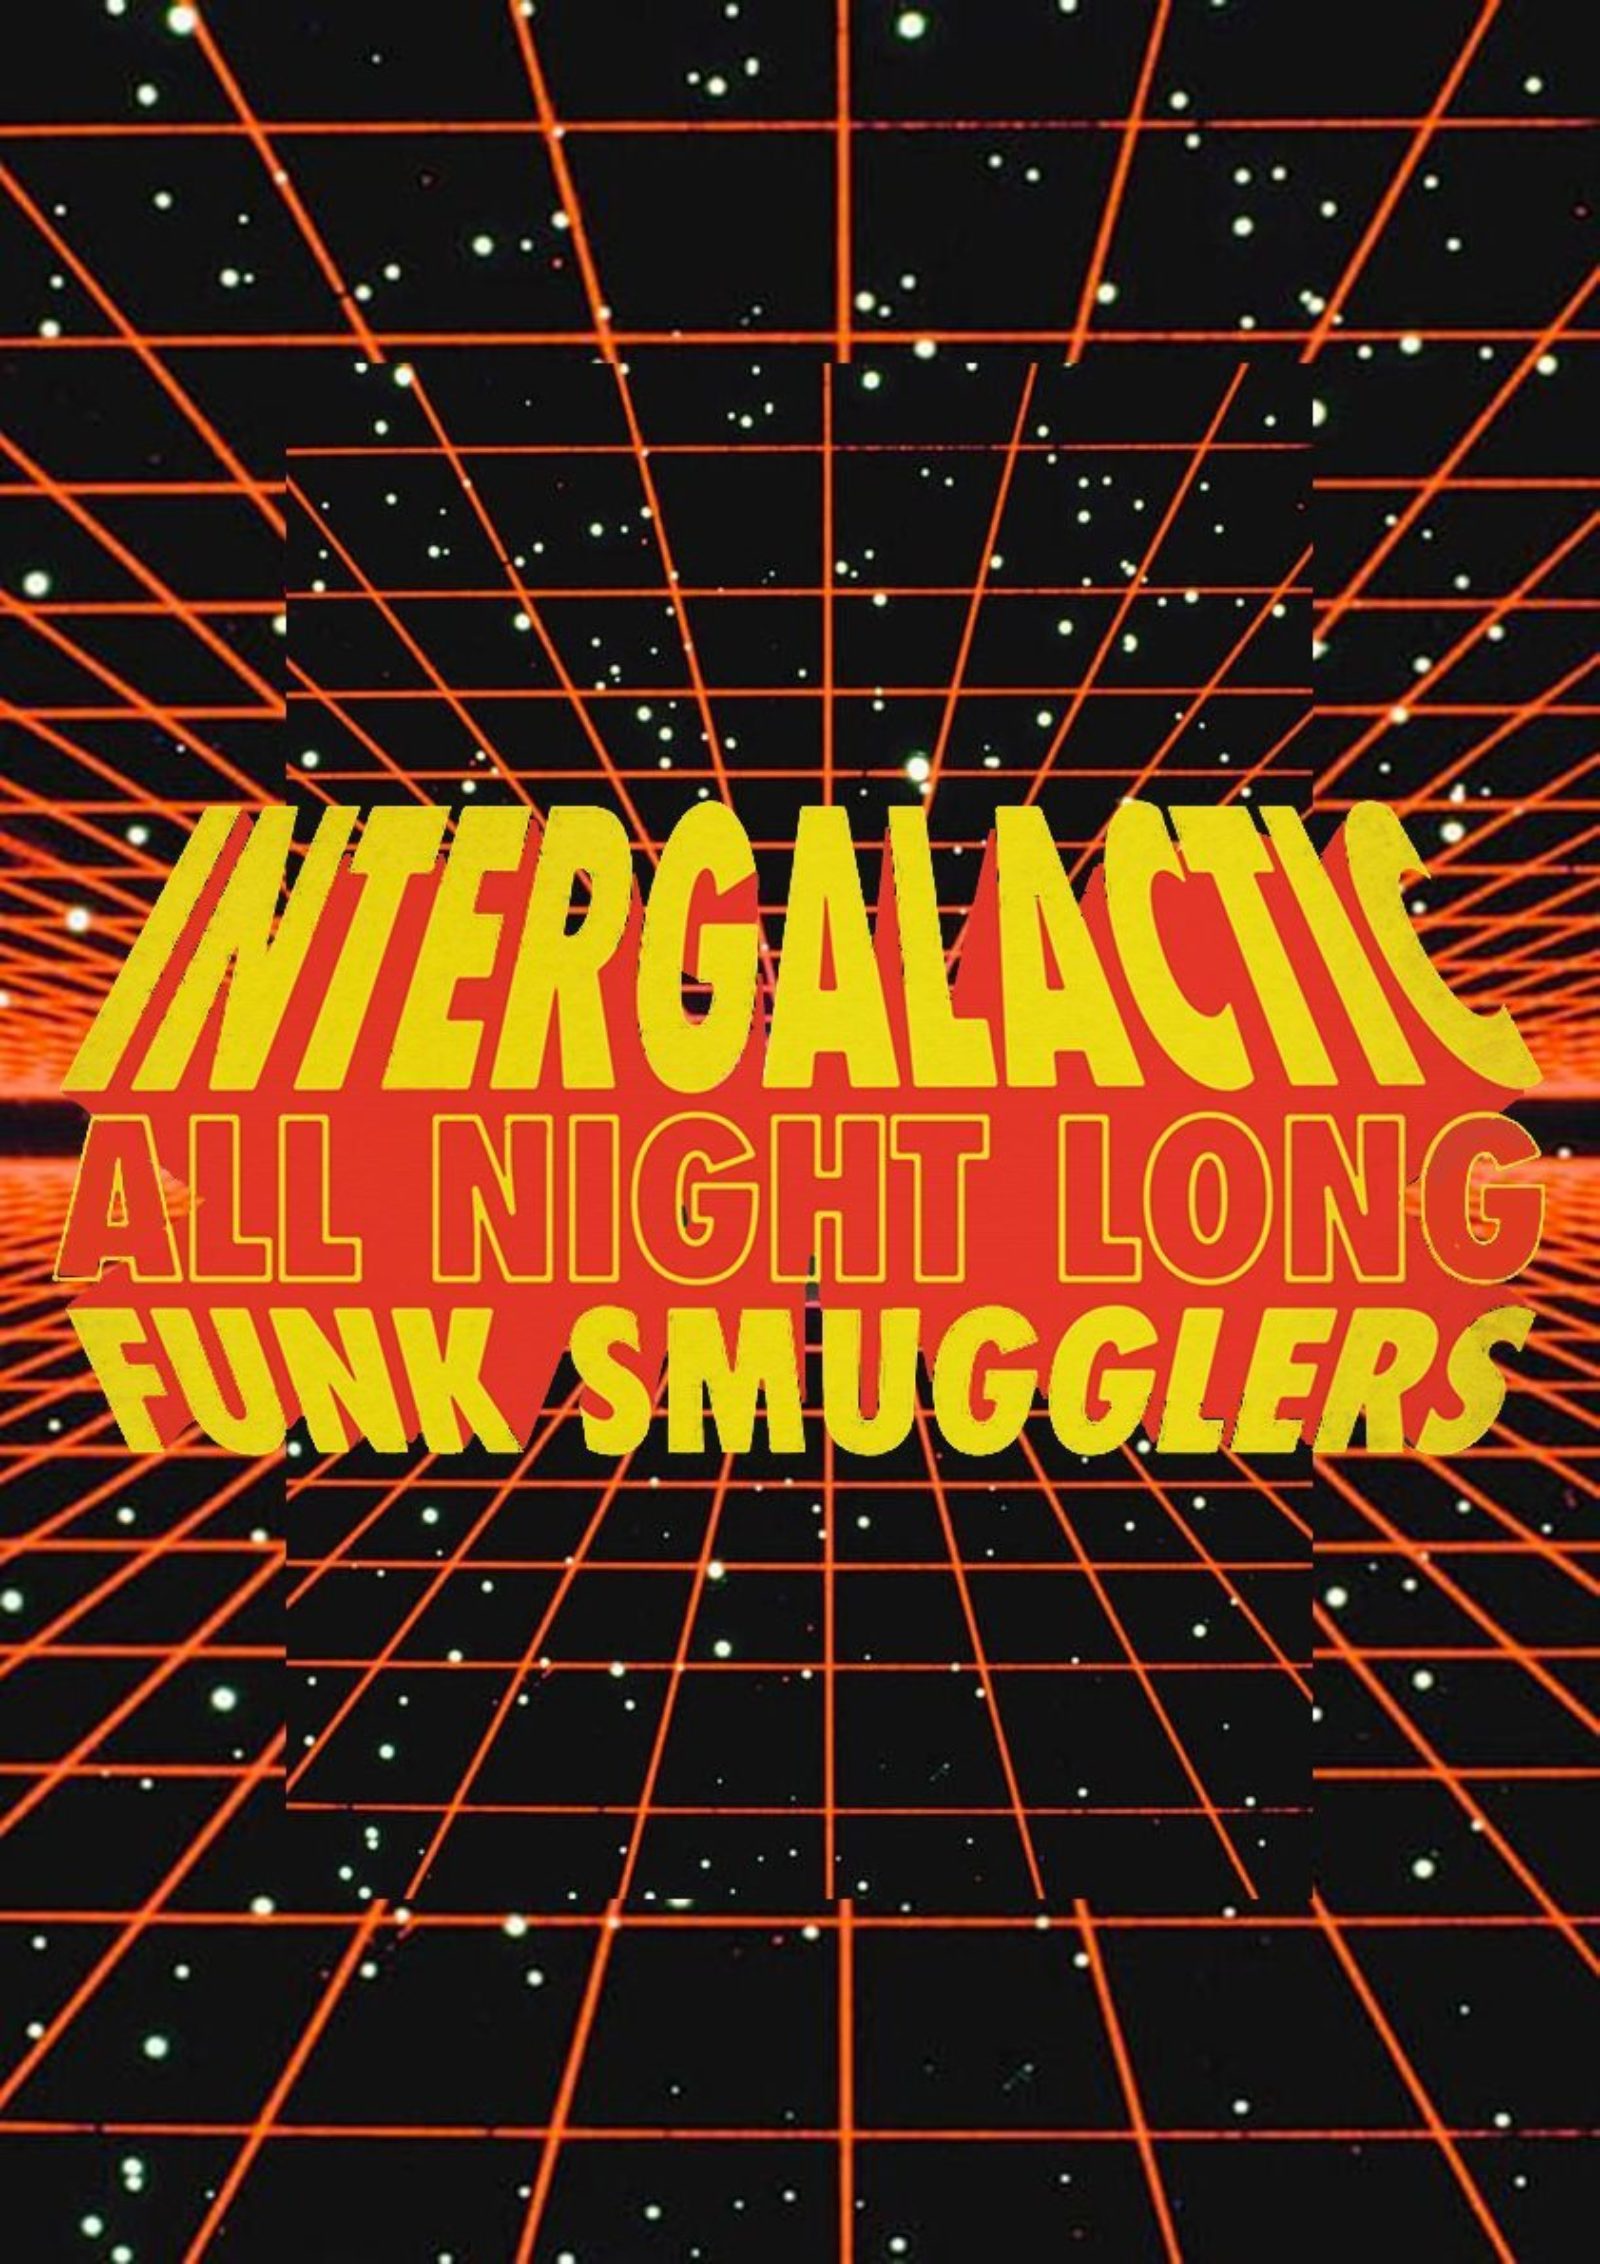 Intergalactic Funk Smugglers - Free b4 12